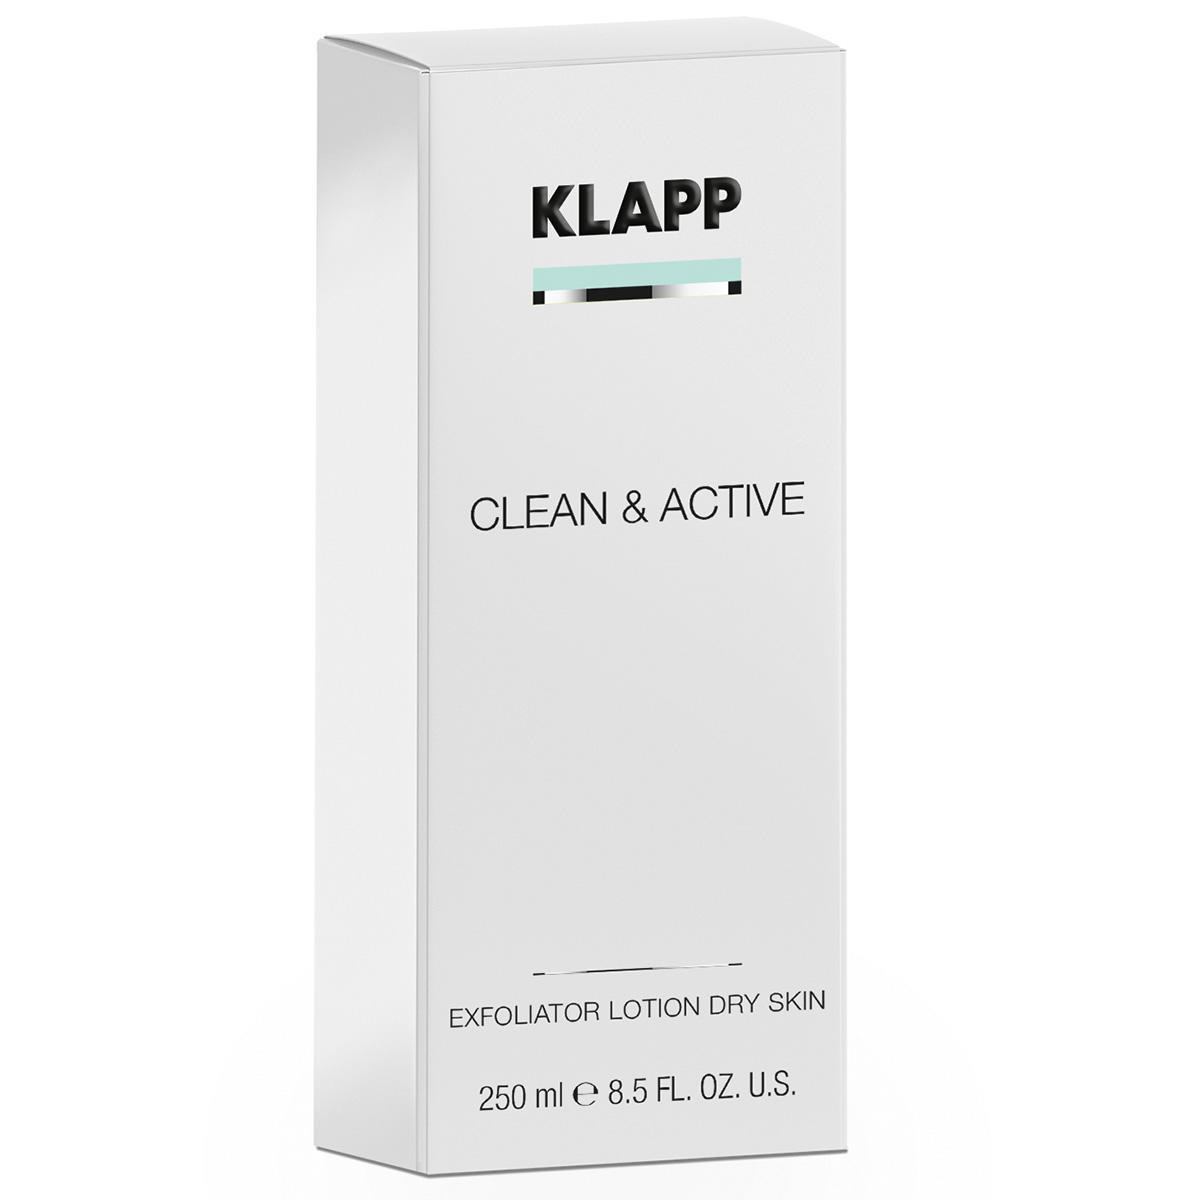 KLAPP CLEAN & ACTIVE Exfoliator Lotion Dry Skin 250 ml - 2